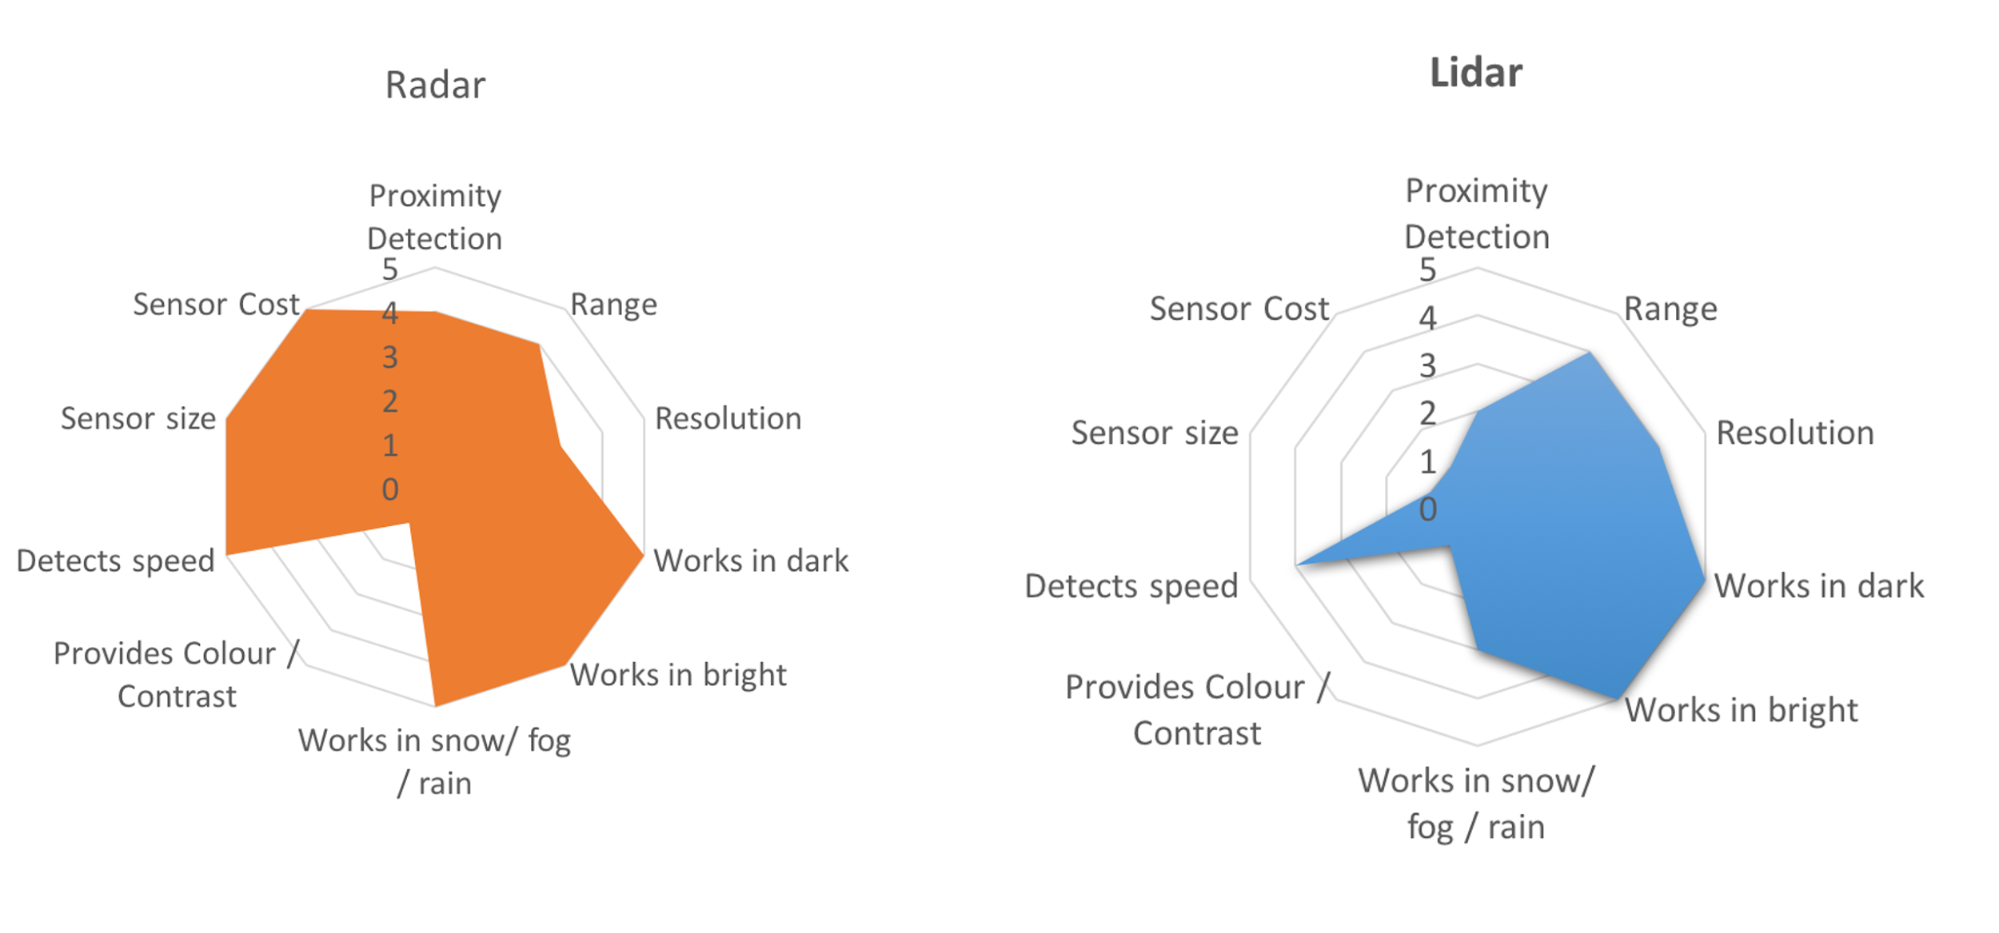 Comparison between RADAR and LIDAR \[source: [cleantechnica](https://cleantechnica.com/2016/07/29/tesla-google-disagree-lidar-right/)\]